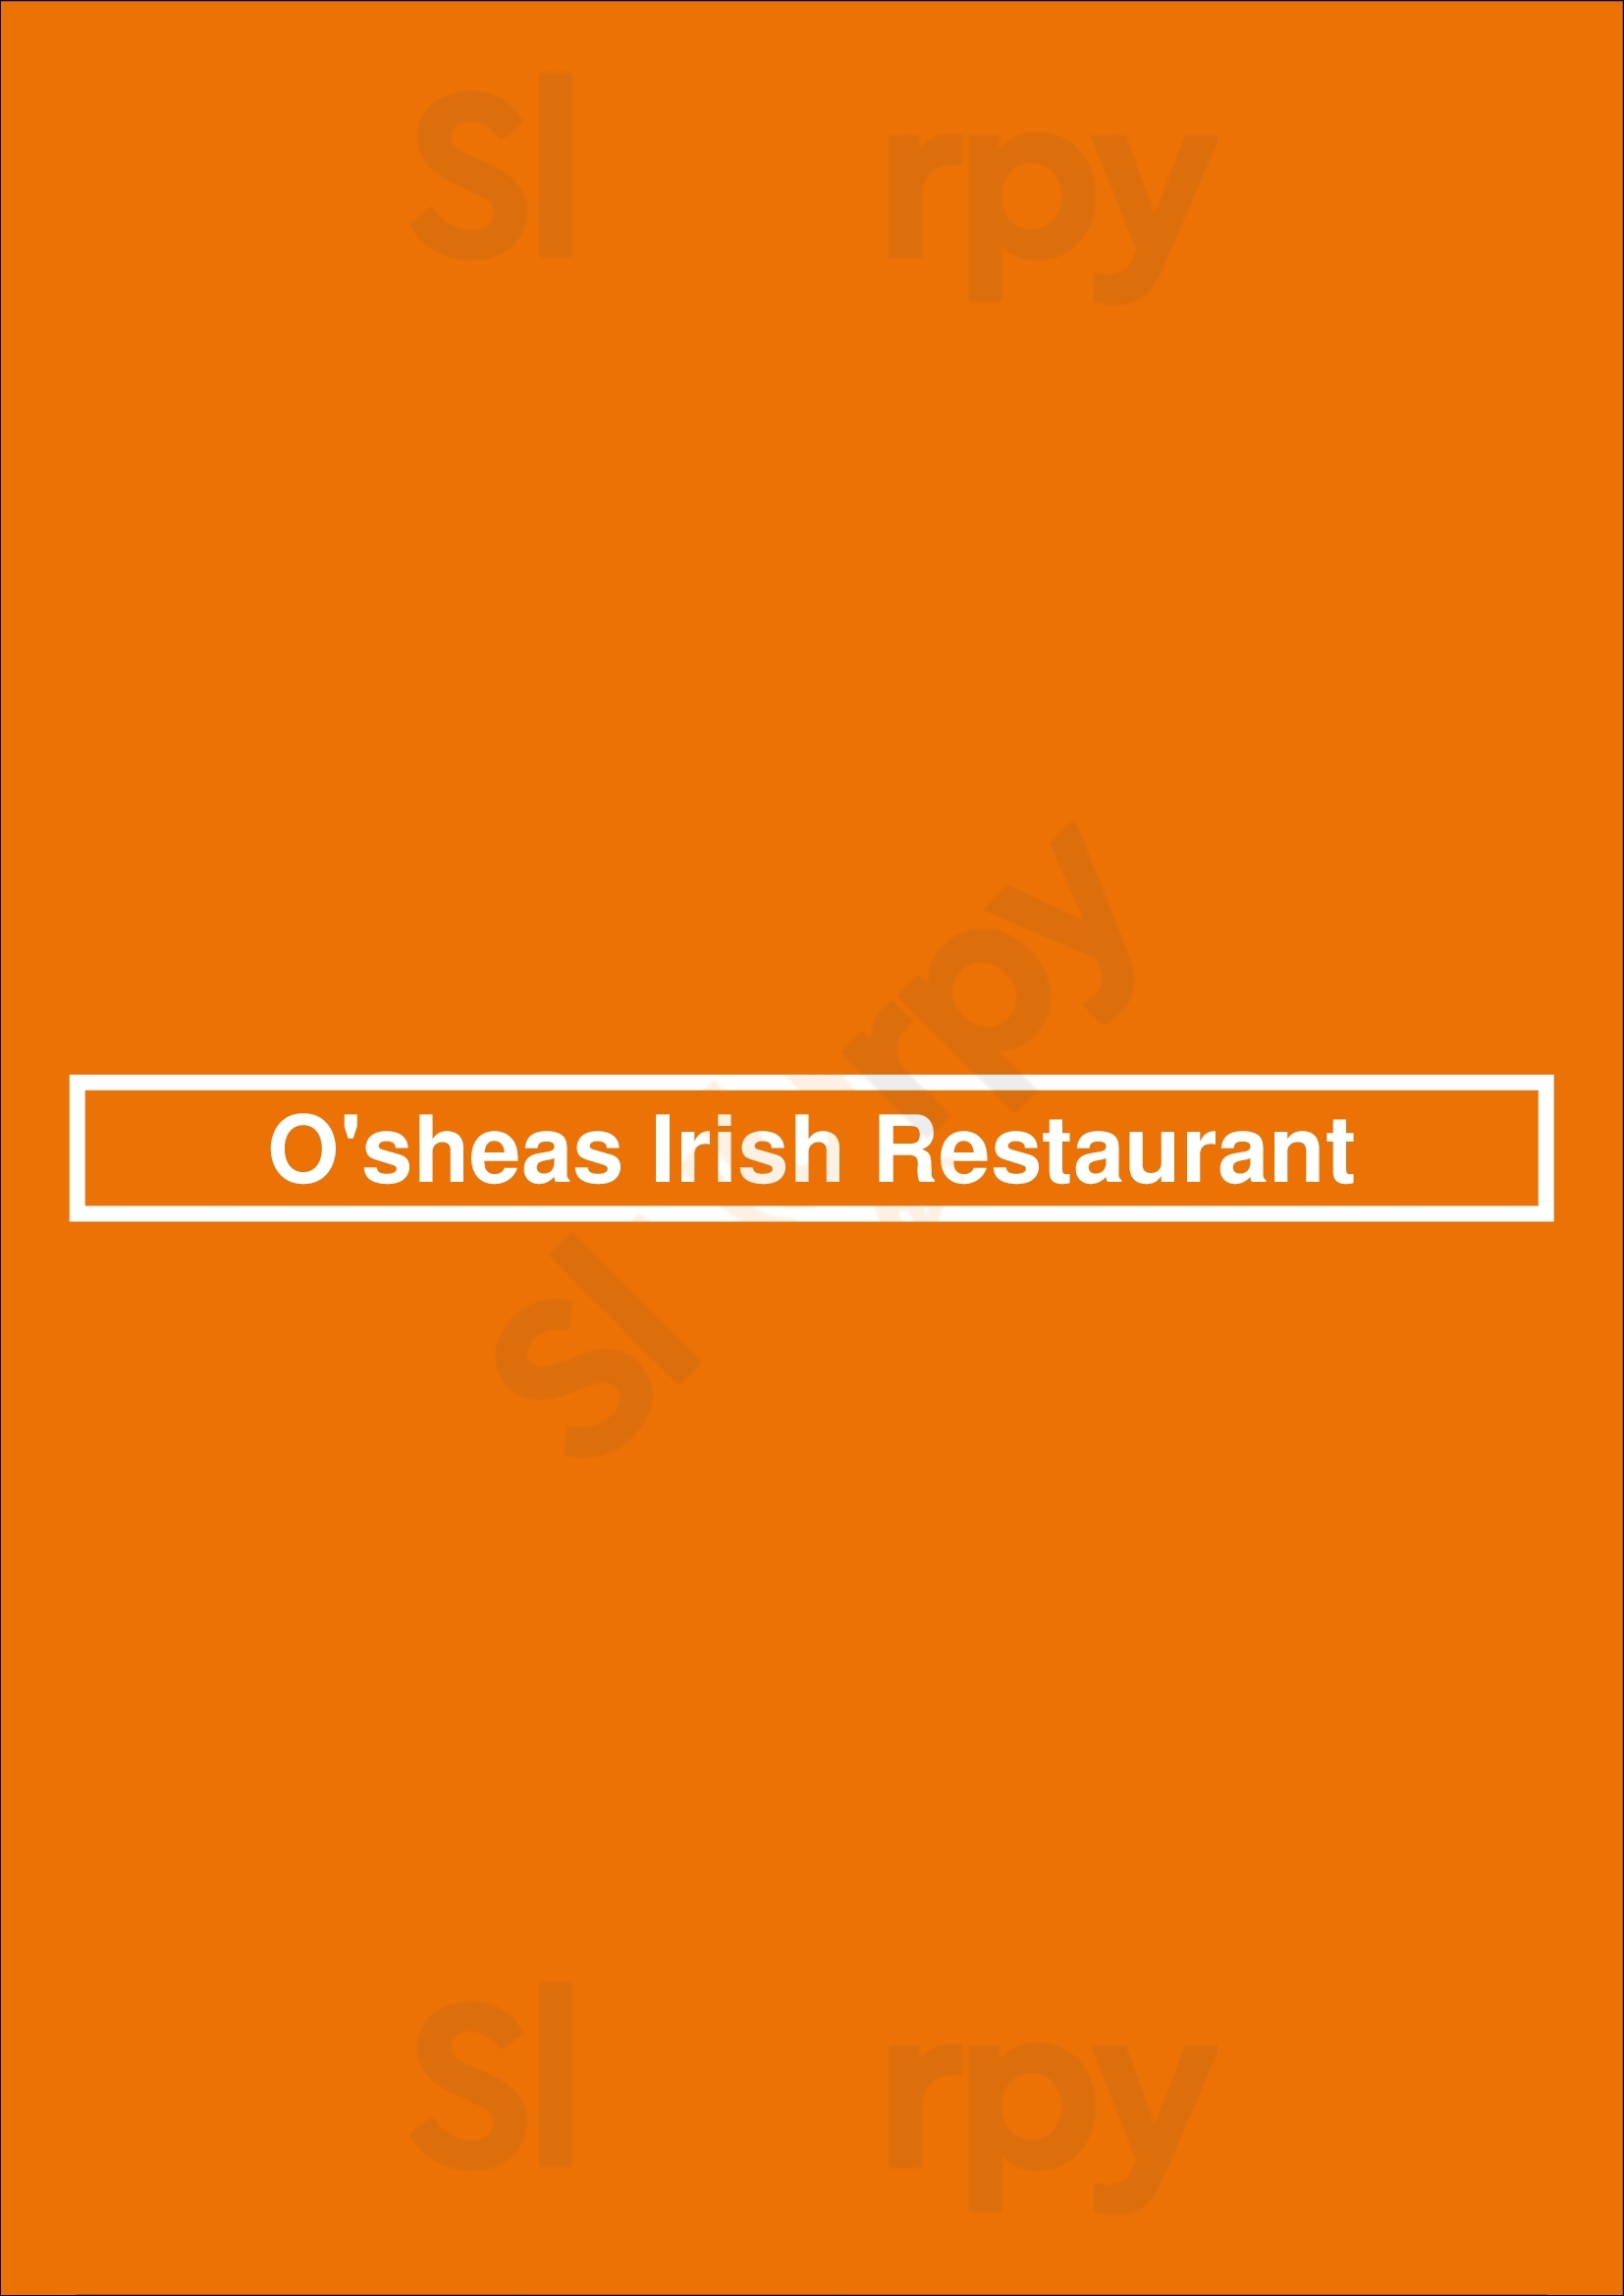 O'sheas Irish Restaurant Dublin Menu - 1